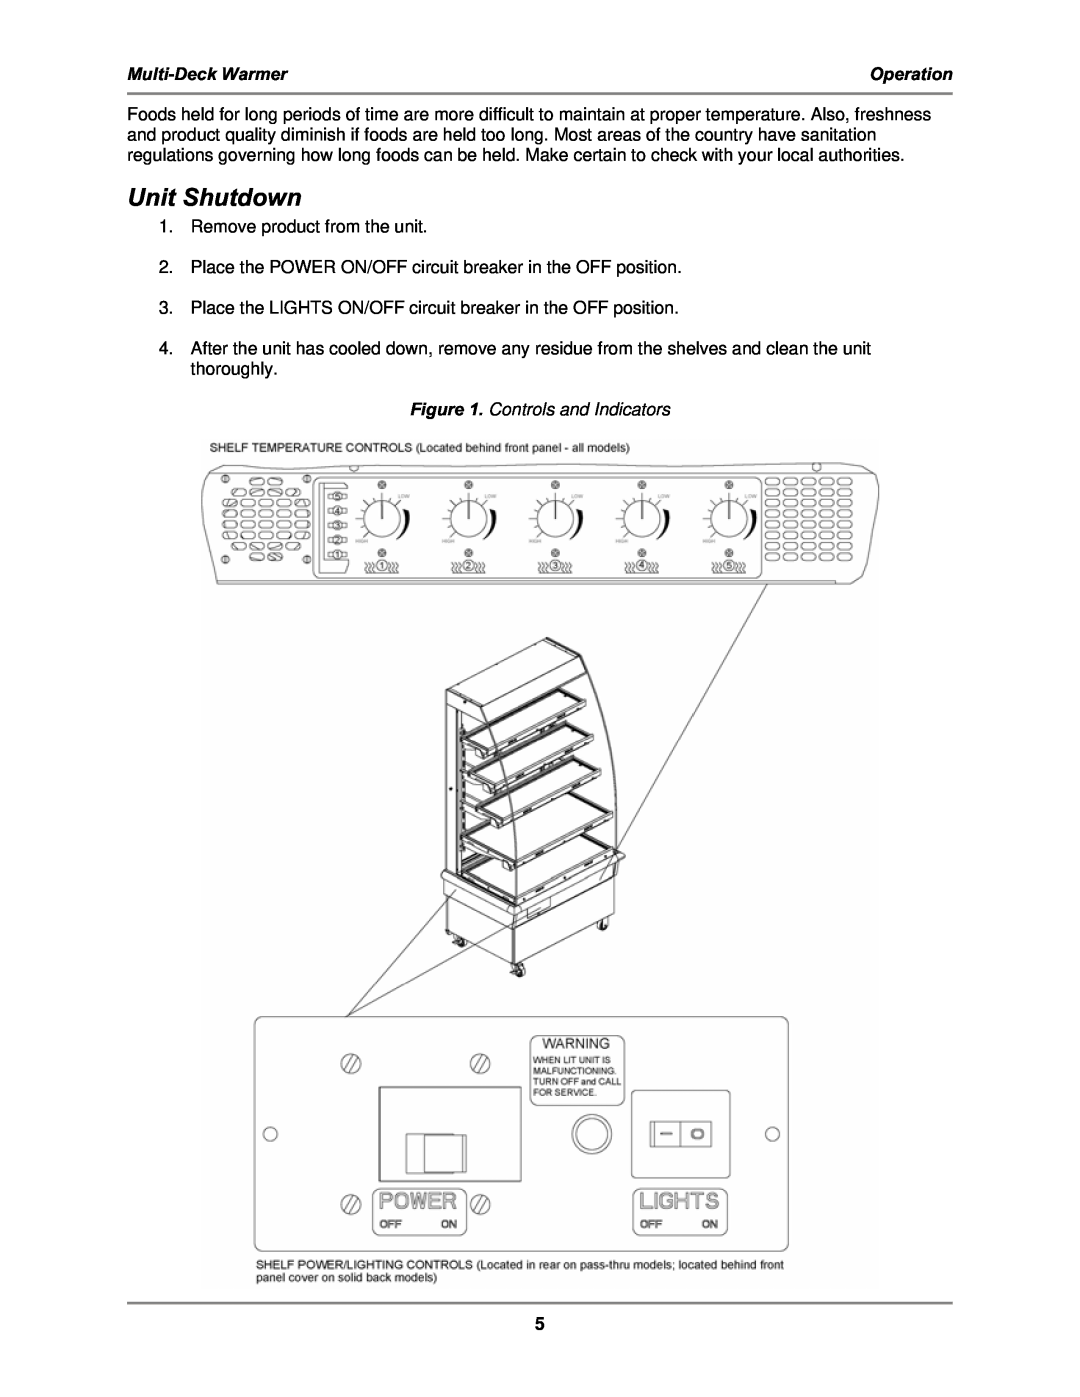 Bakers Pride Oven MDW operation manual Unit Shutdown, Controls and Indicators, Multi-DeckWarmer, Operation 